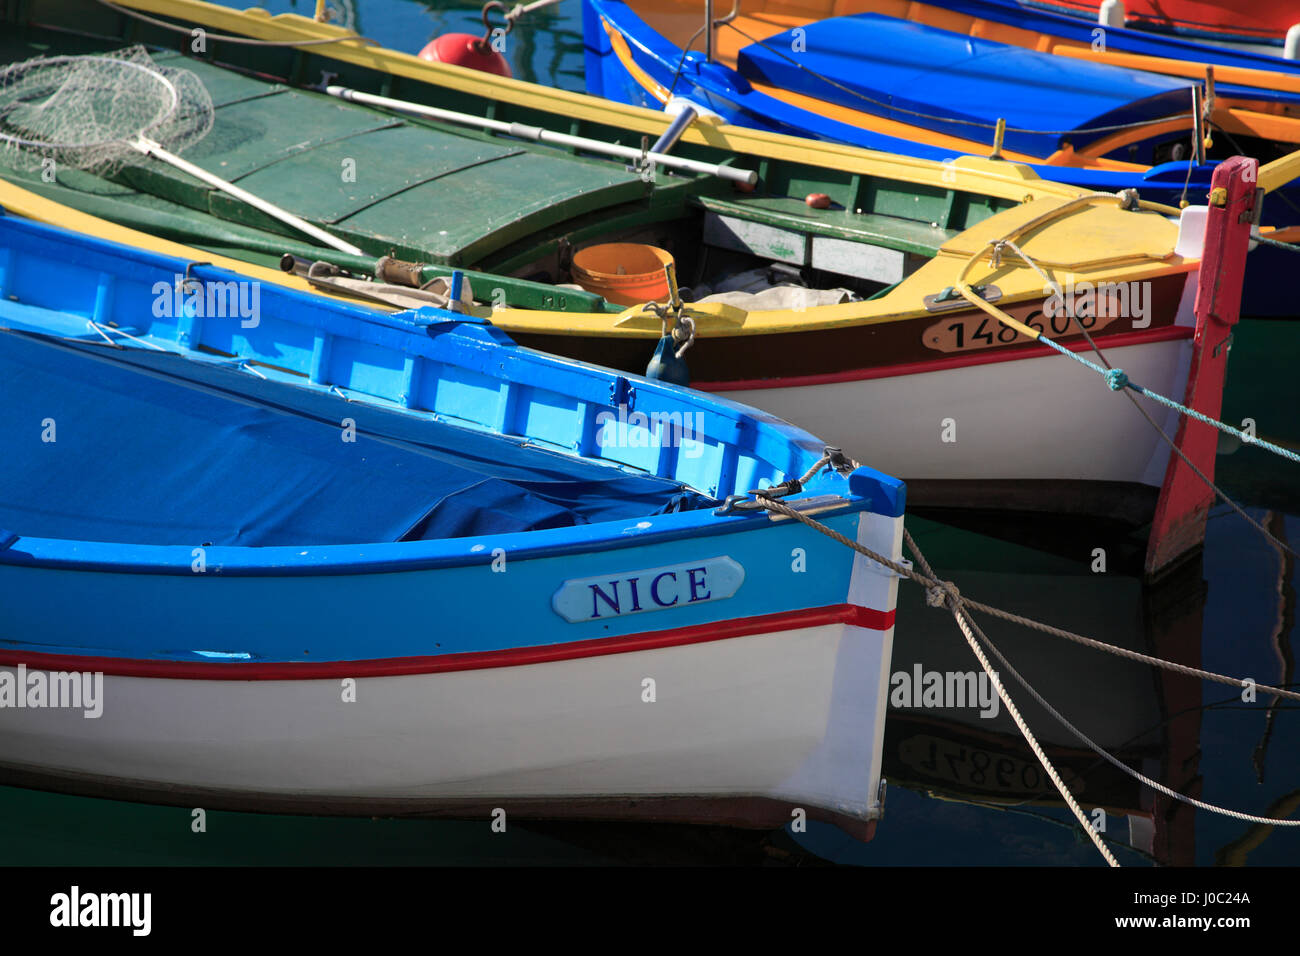 Port Lympia, Harbor, Nice, Alpes Maritimes, Cote d'Azur, Provence, French Riviera, France Stock Photo